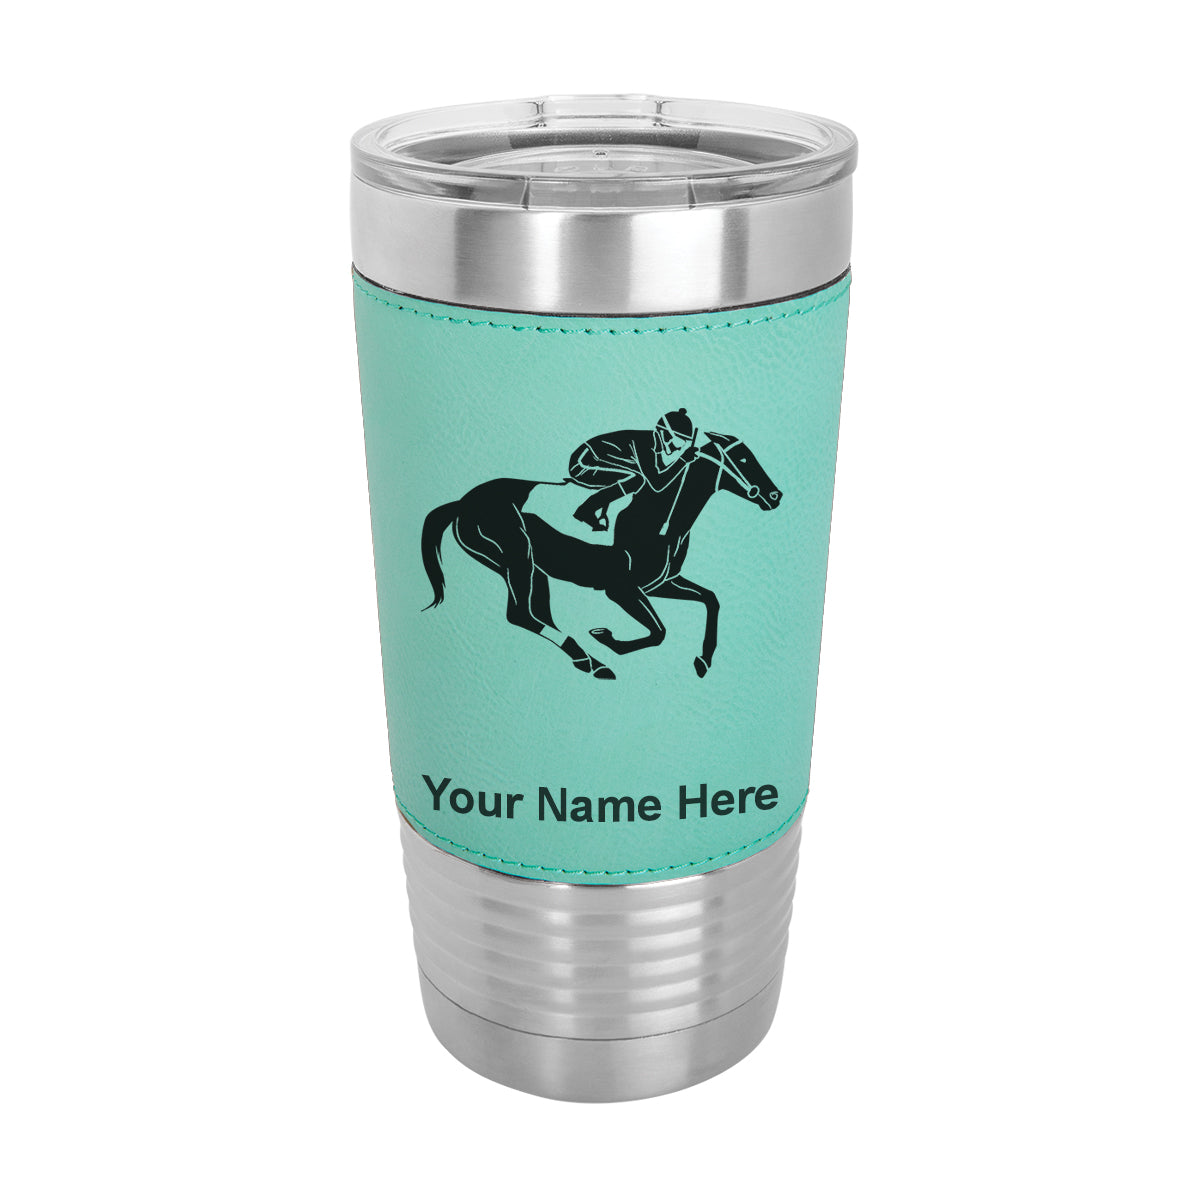 20oz Faux Leather Tumbler Mug, Horse Racing, Personalized Engraving Included - LaserGram Custom Engraved Gifts